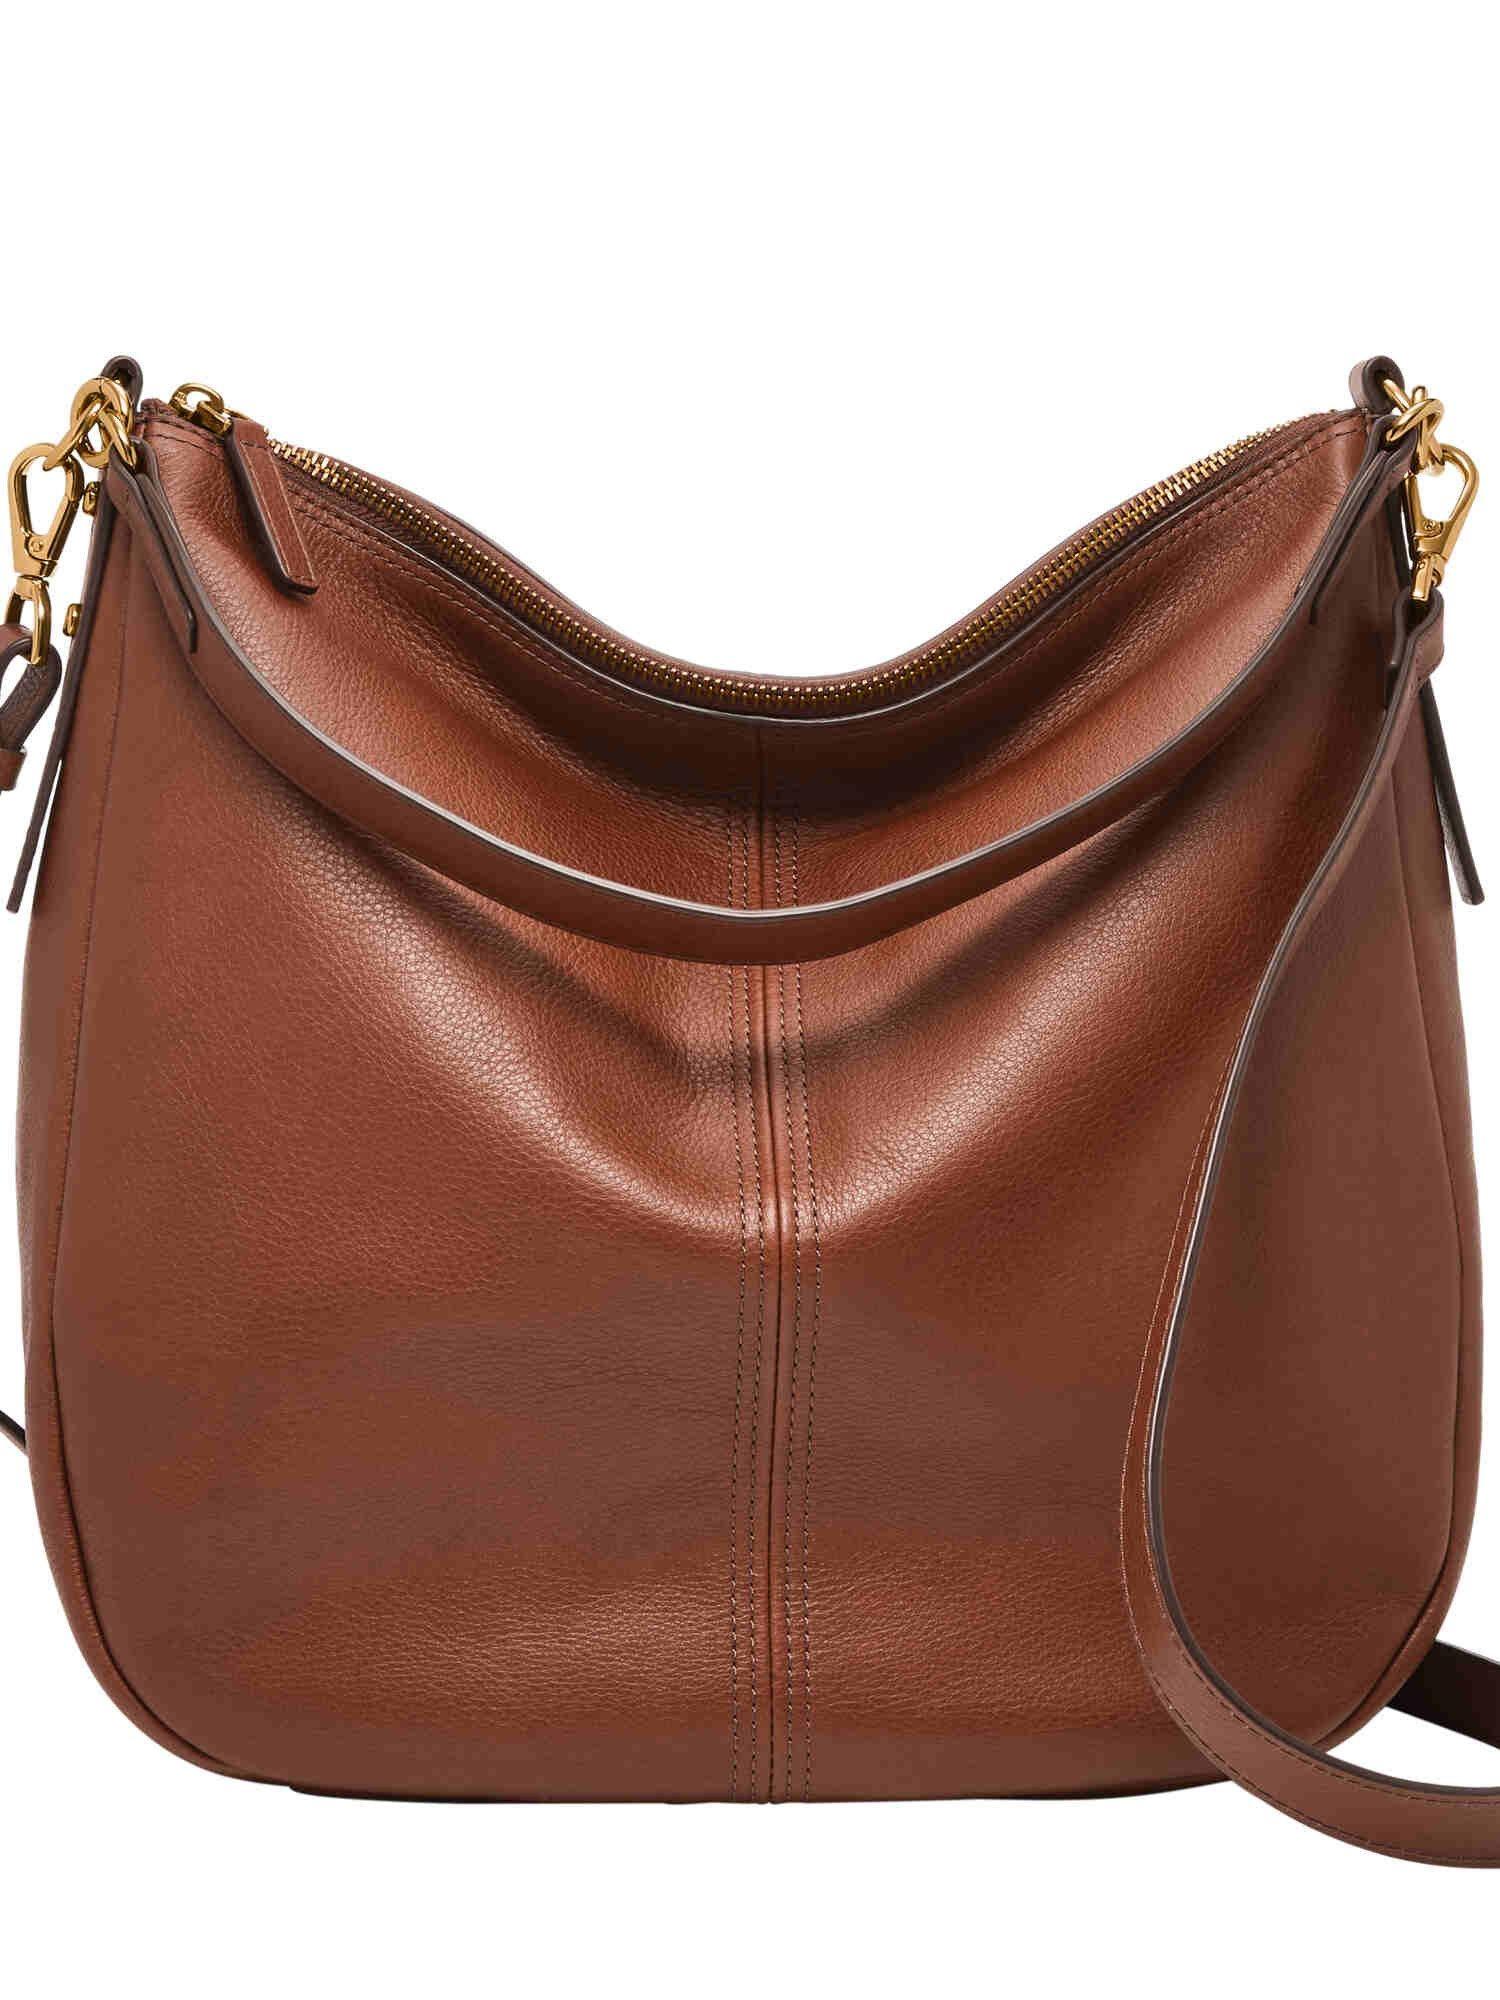 jolie brown handbag (m)